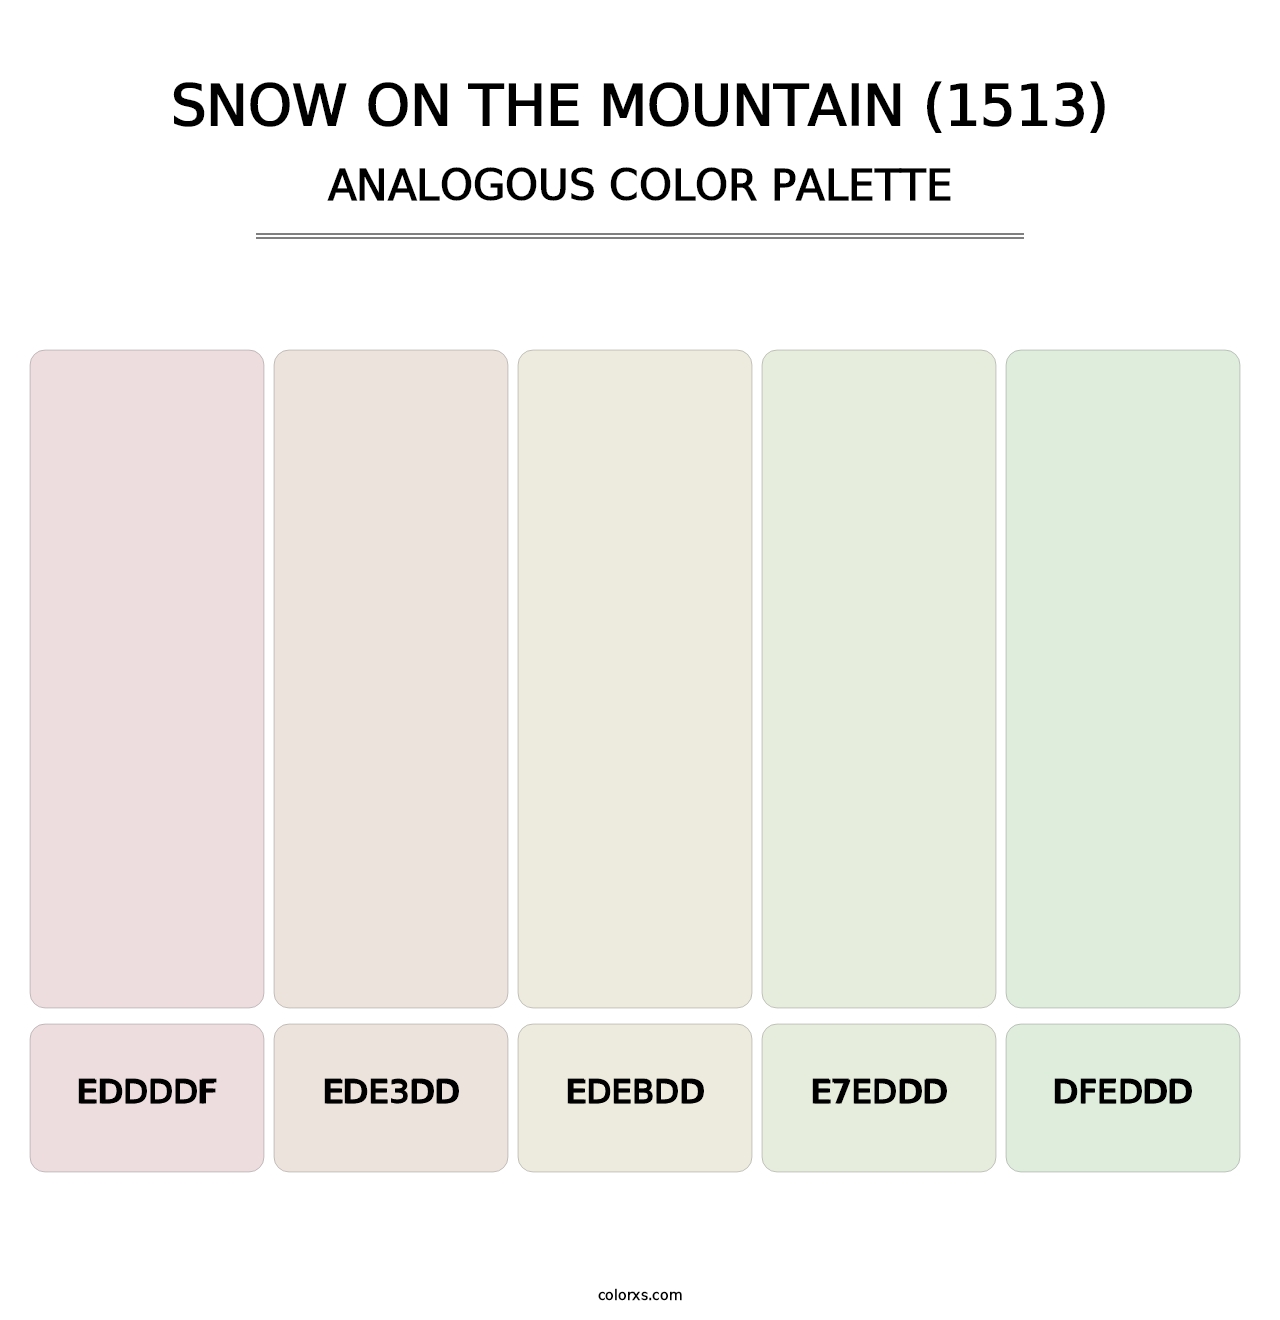 Snow on the Mountain (1513) - Analogous Color Palette